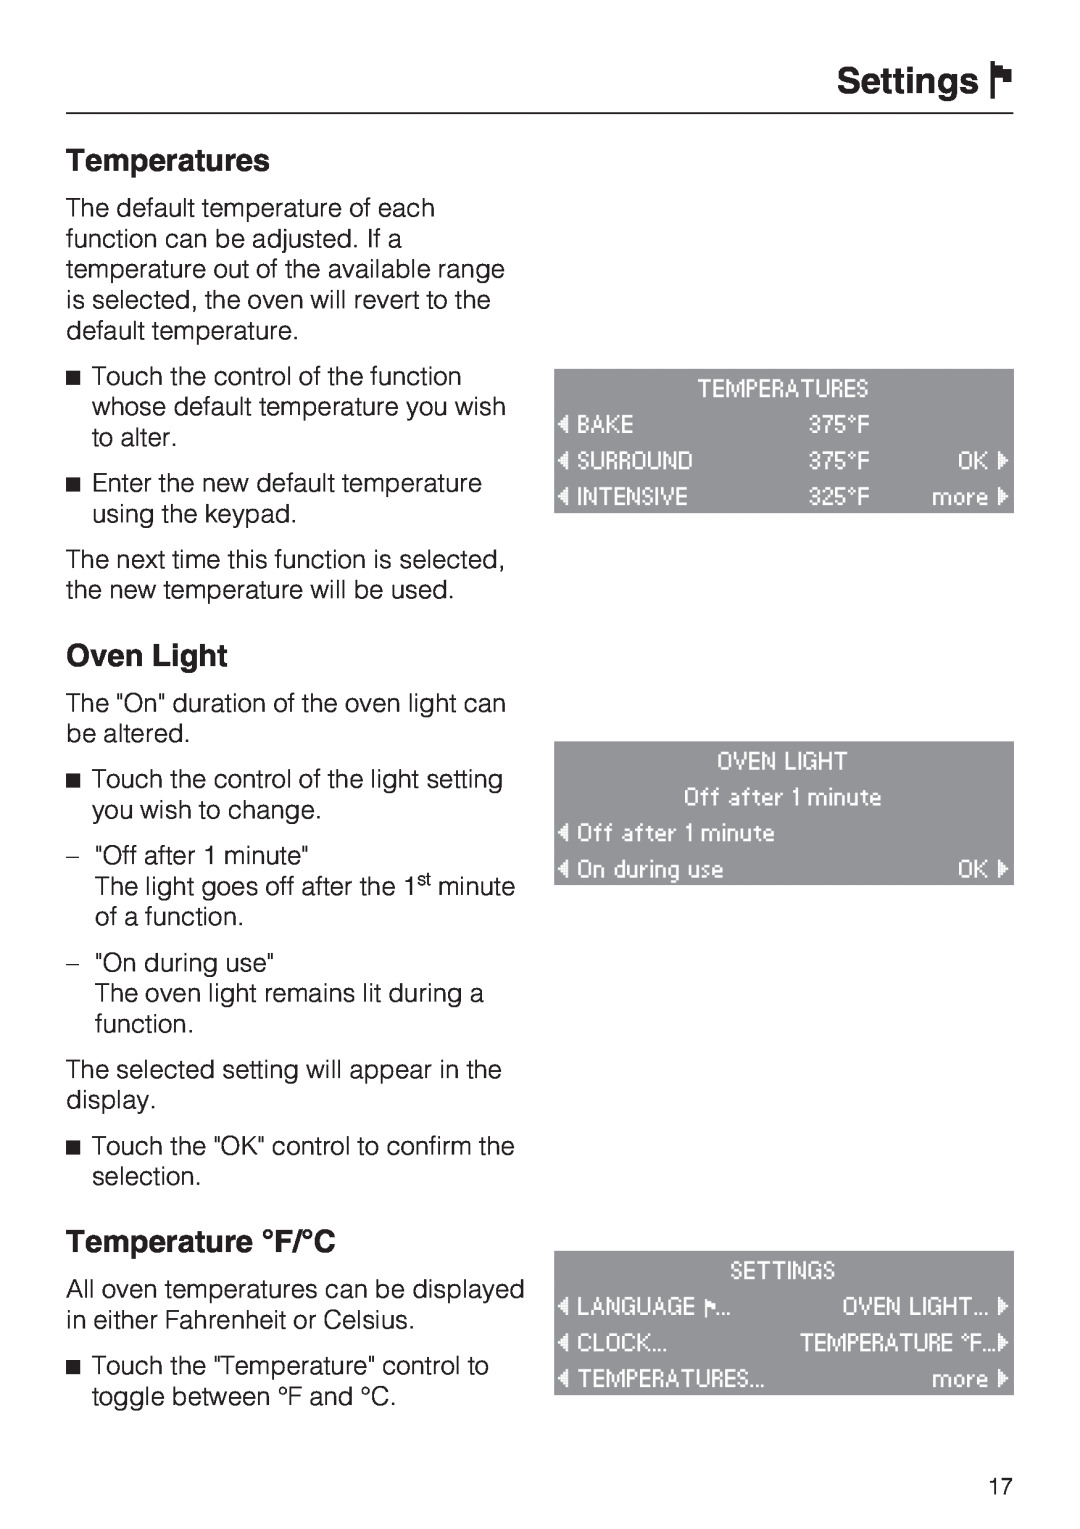 Miele H 4084 BM, H 4086 BM installation instructions Temperatures, Oven Light, Temperature F/C, Settings 